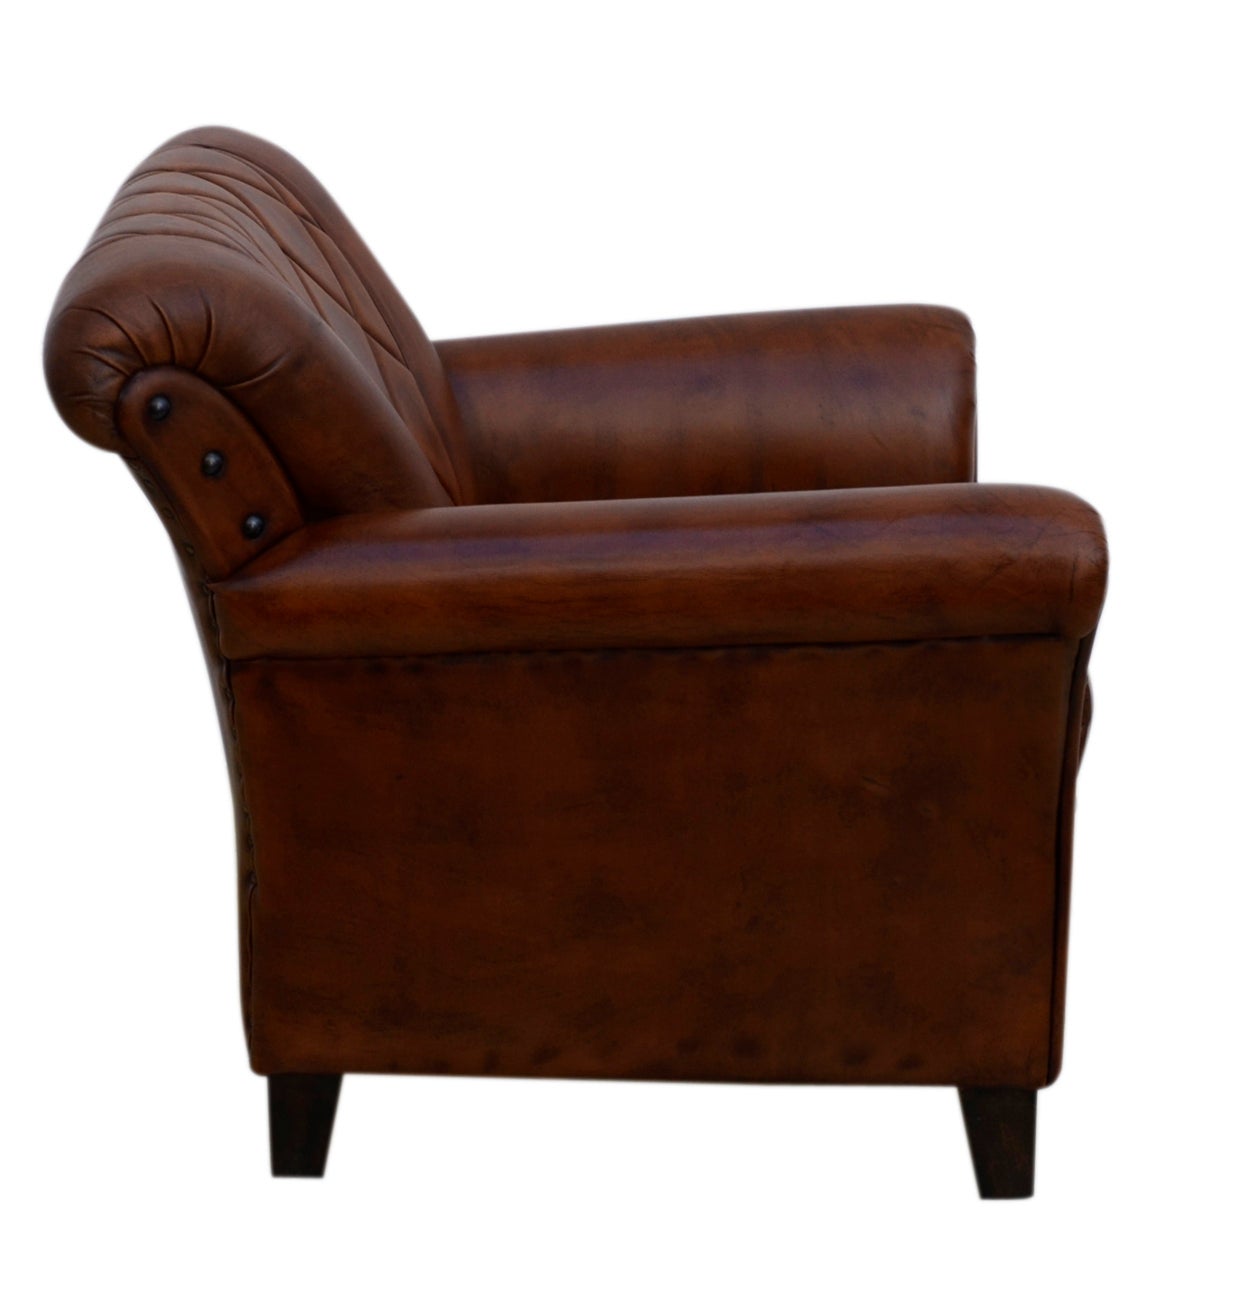 Criss Cross Chocolate Leather Arm Chair Buy Armchairs